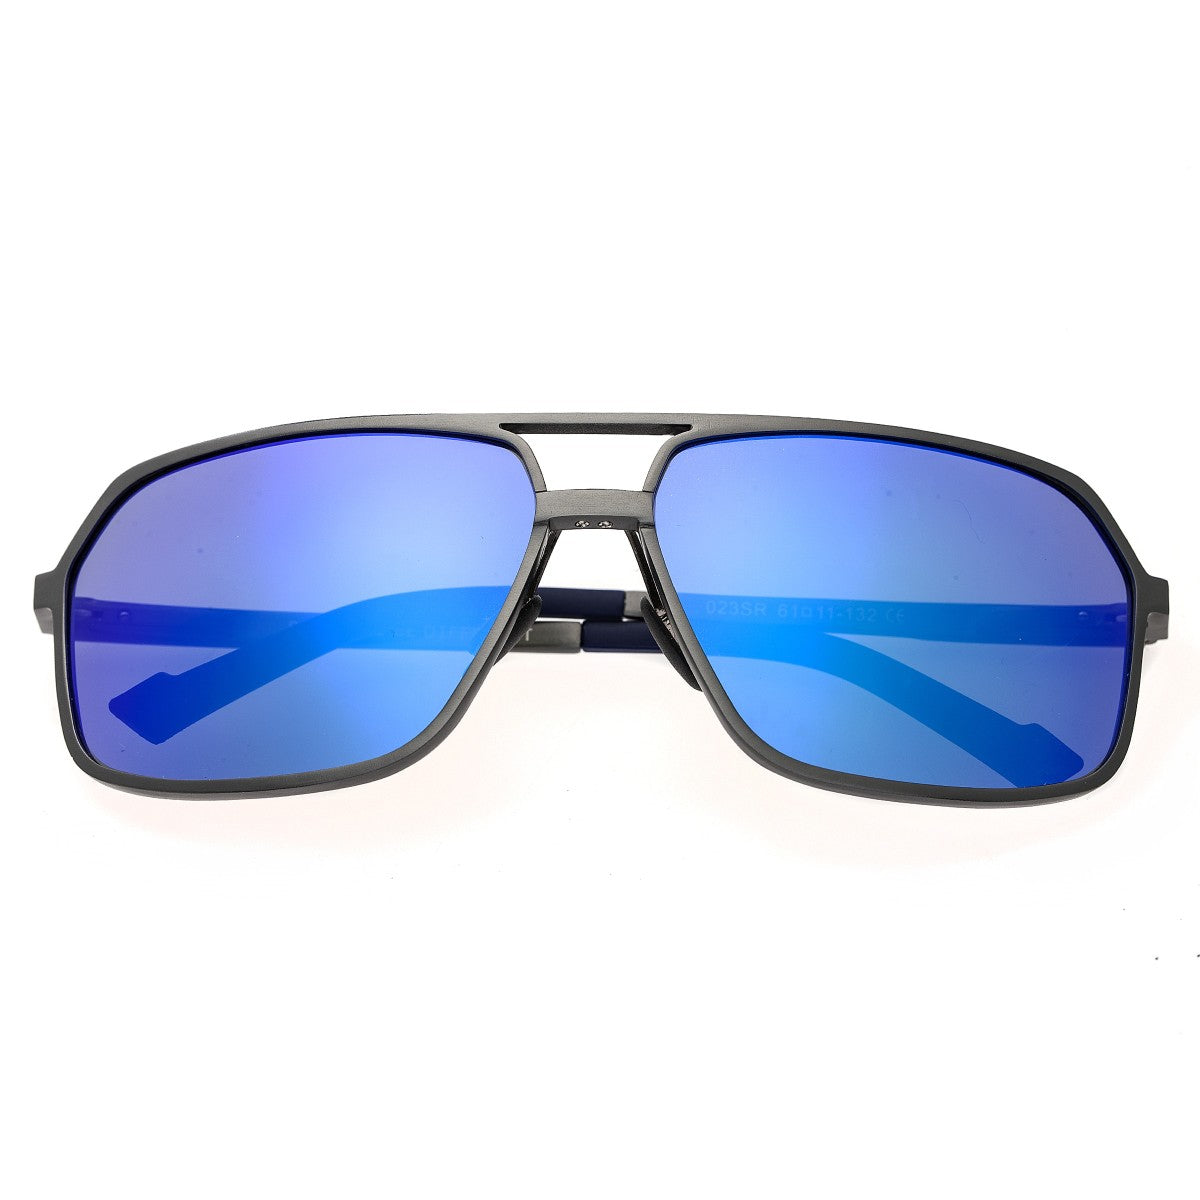 Breed Fornax Aluminium Polarized Sunglasses - Gunmetal/Blue - BSG023SR